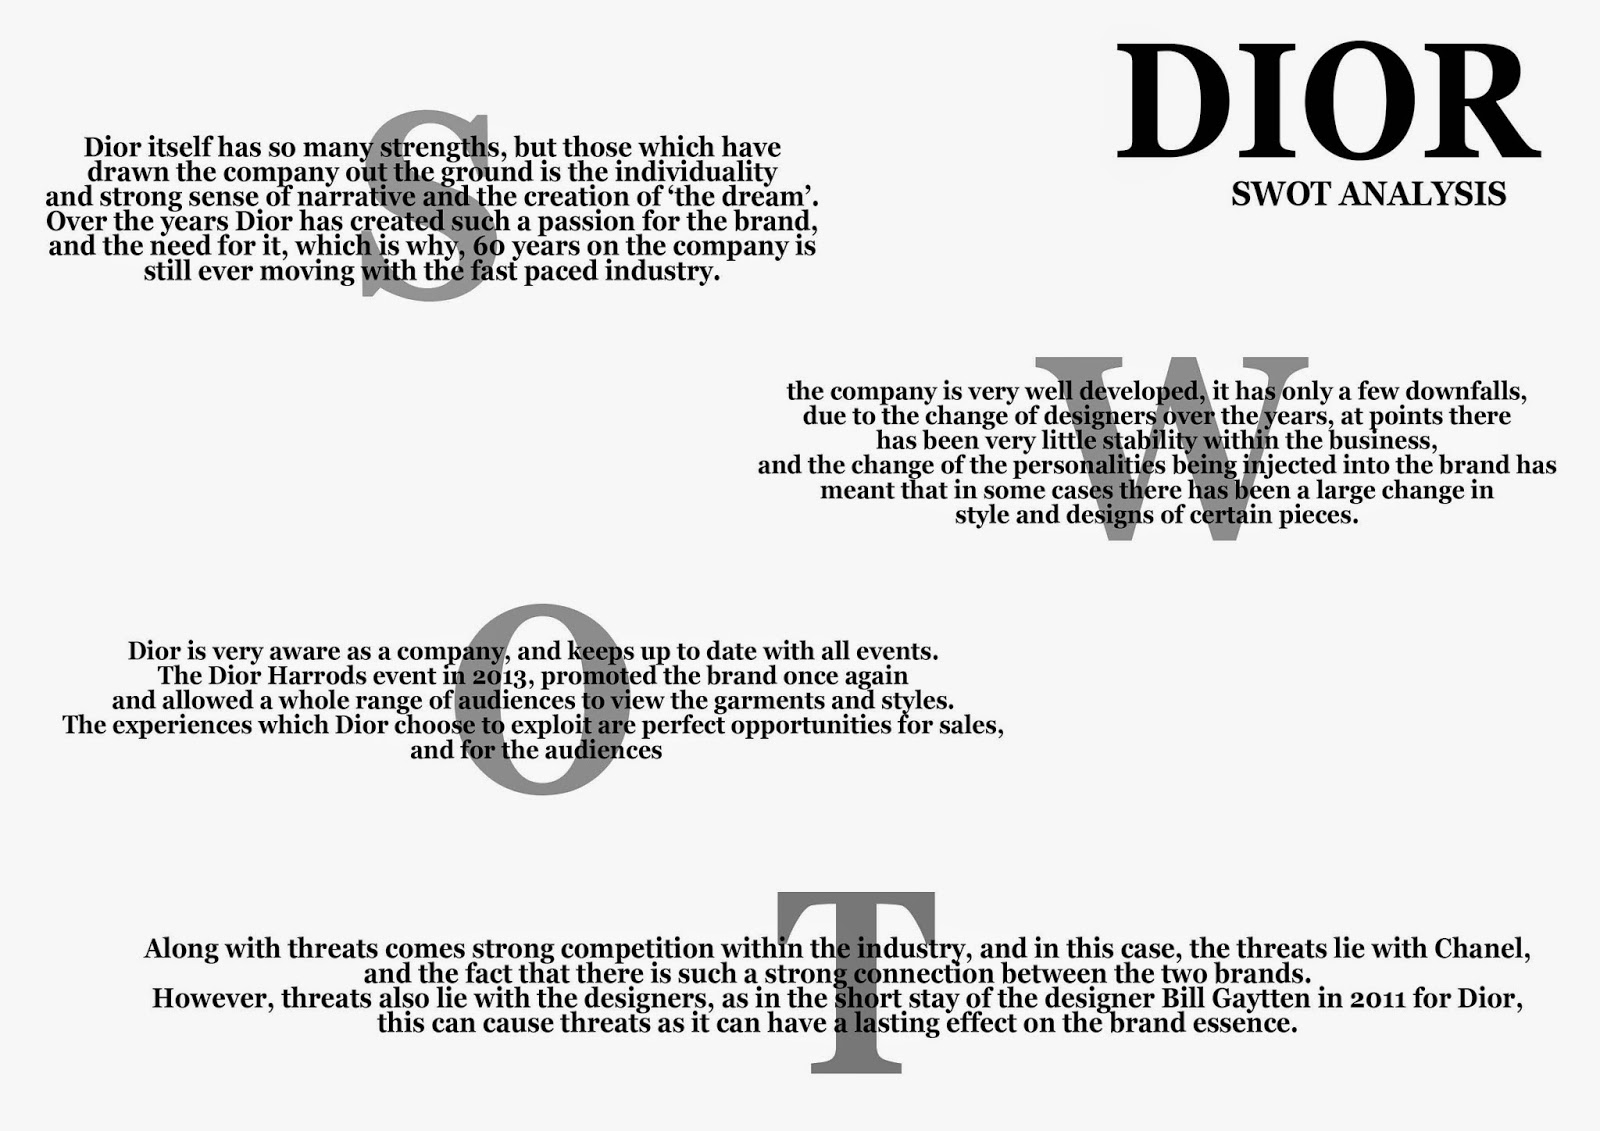 Dior SWOT Analysis [classic]